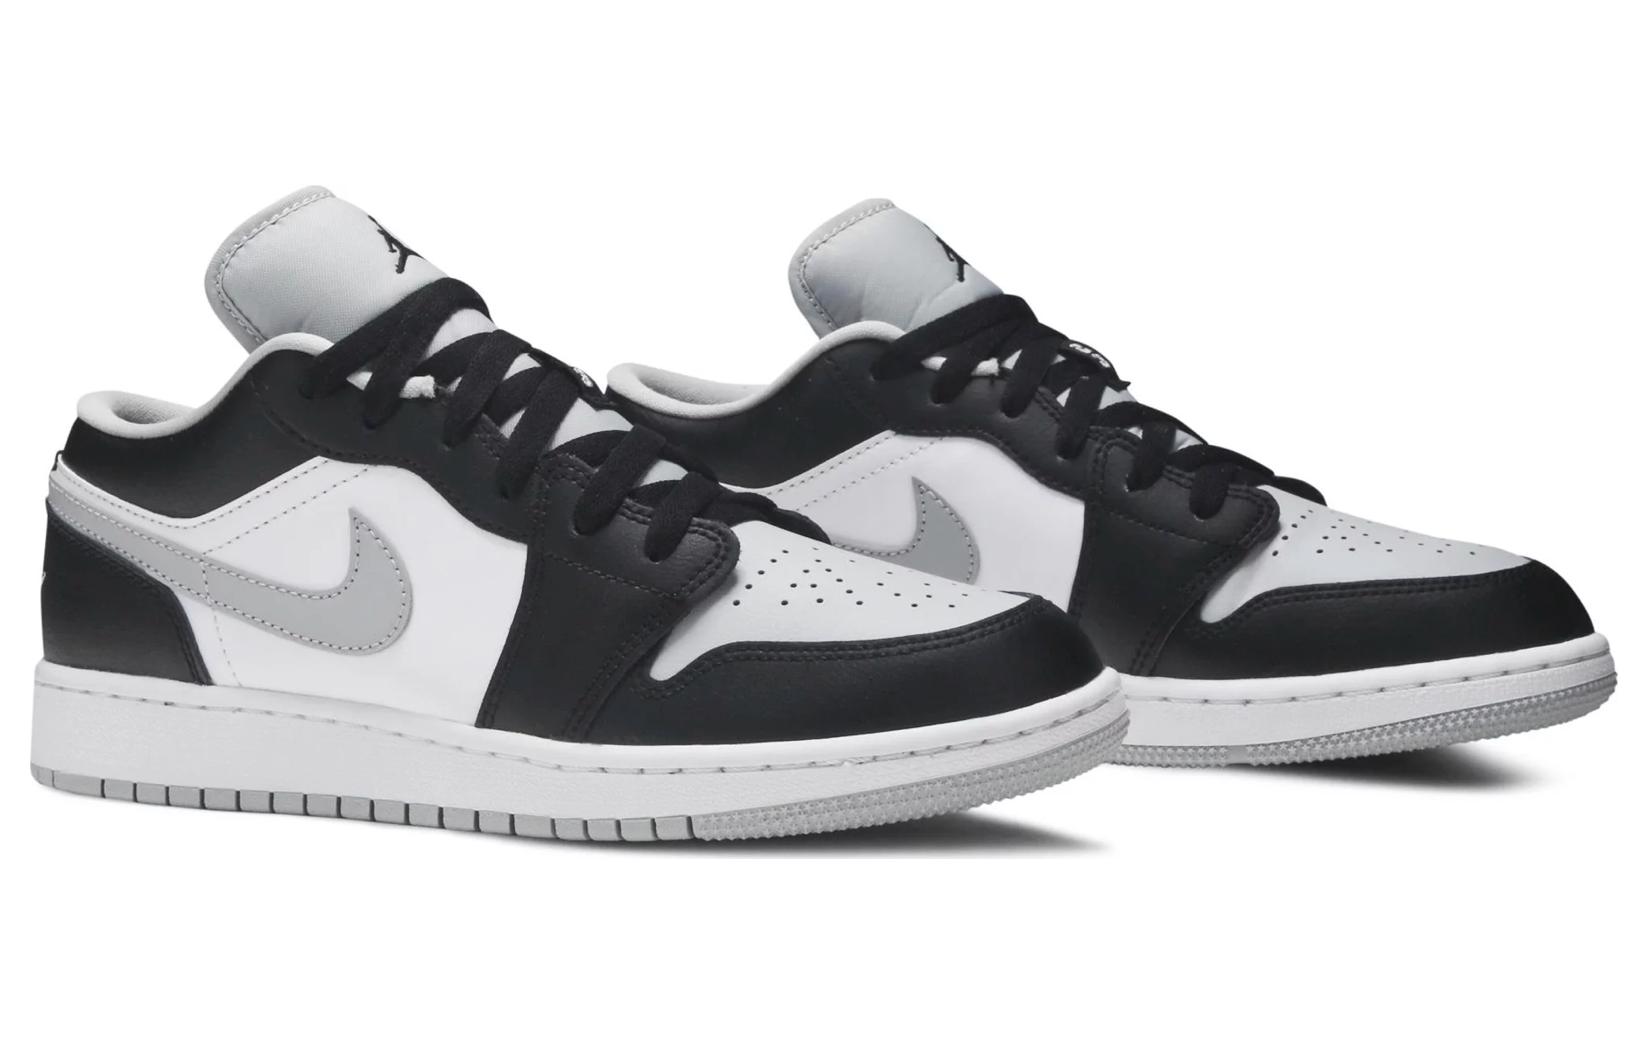 Nike Jordan 1 Low Grey Toe (gs) in Black | Lyst